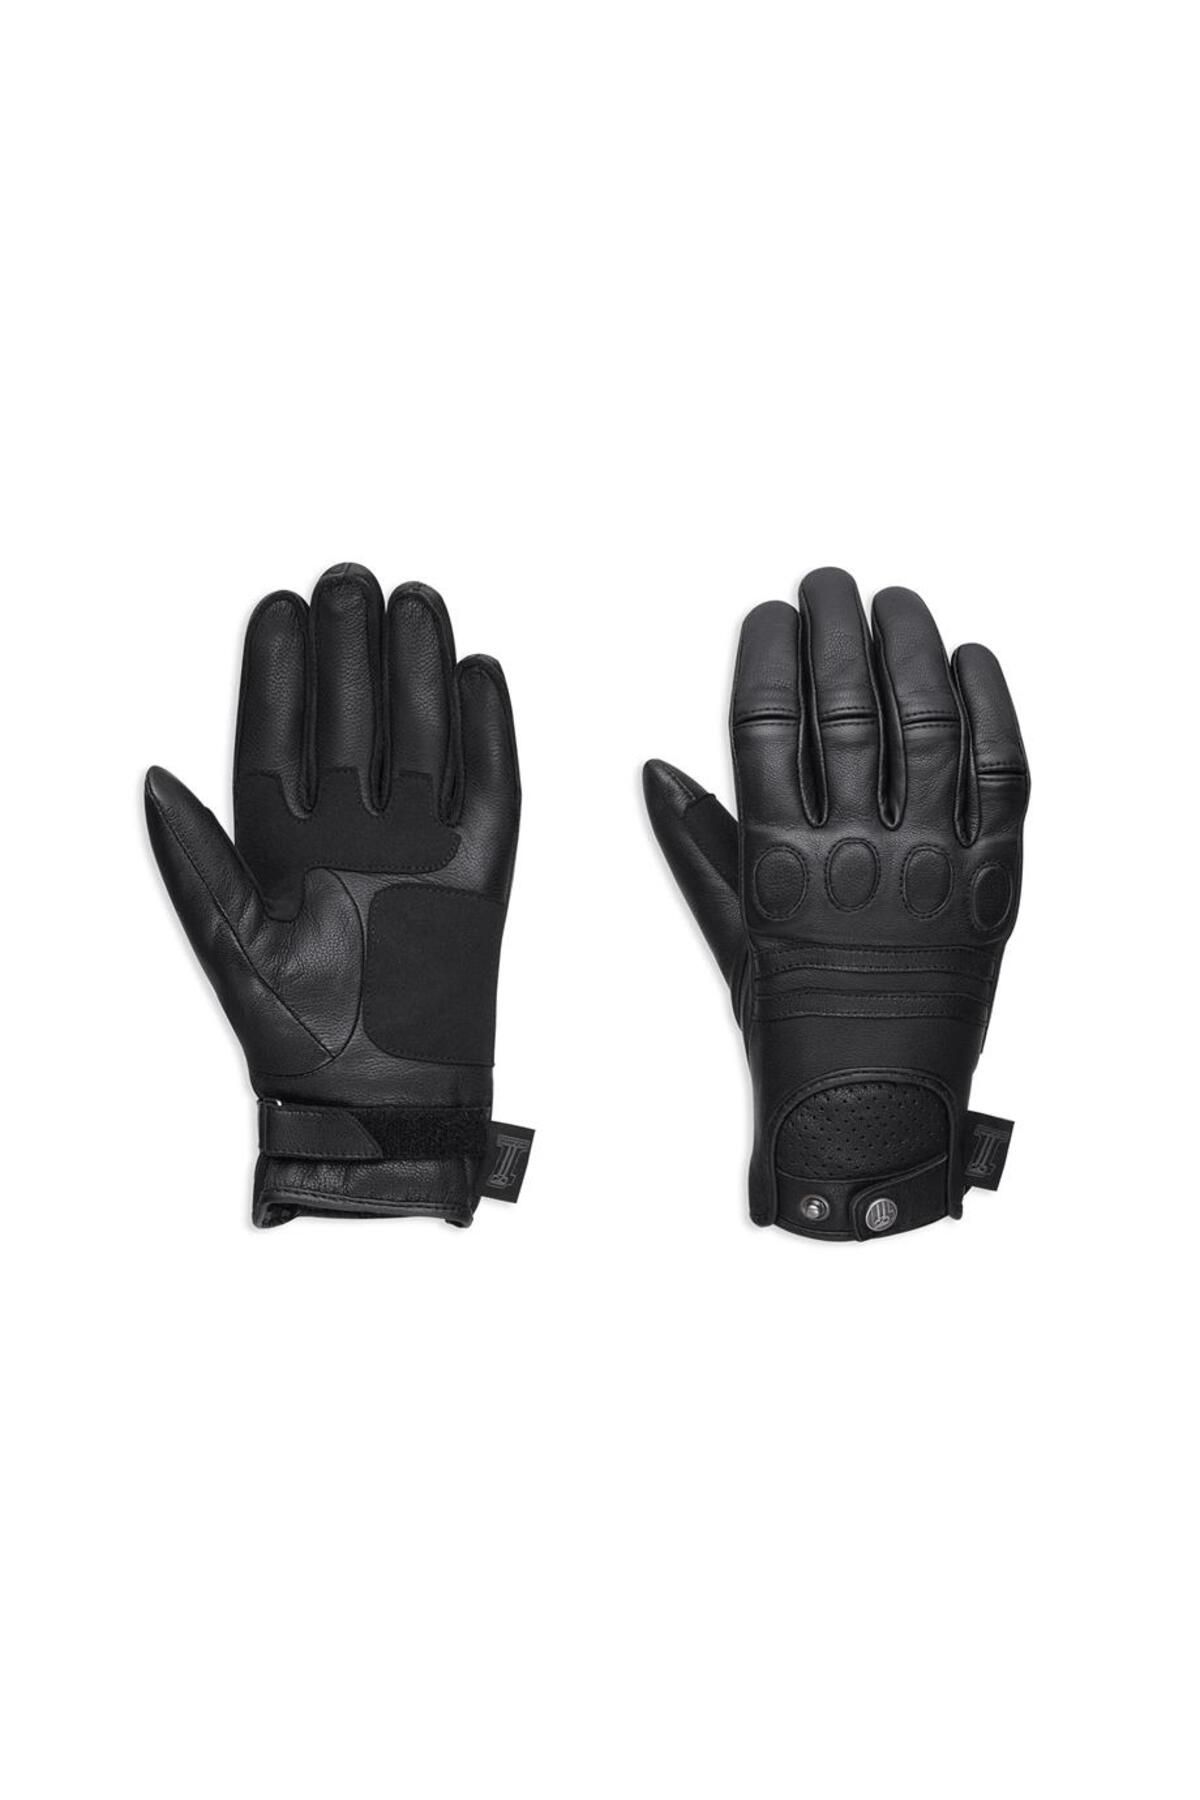 Harley Davidson Harley-Davidson Women's #1 Skull Leather Gloves